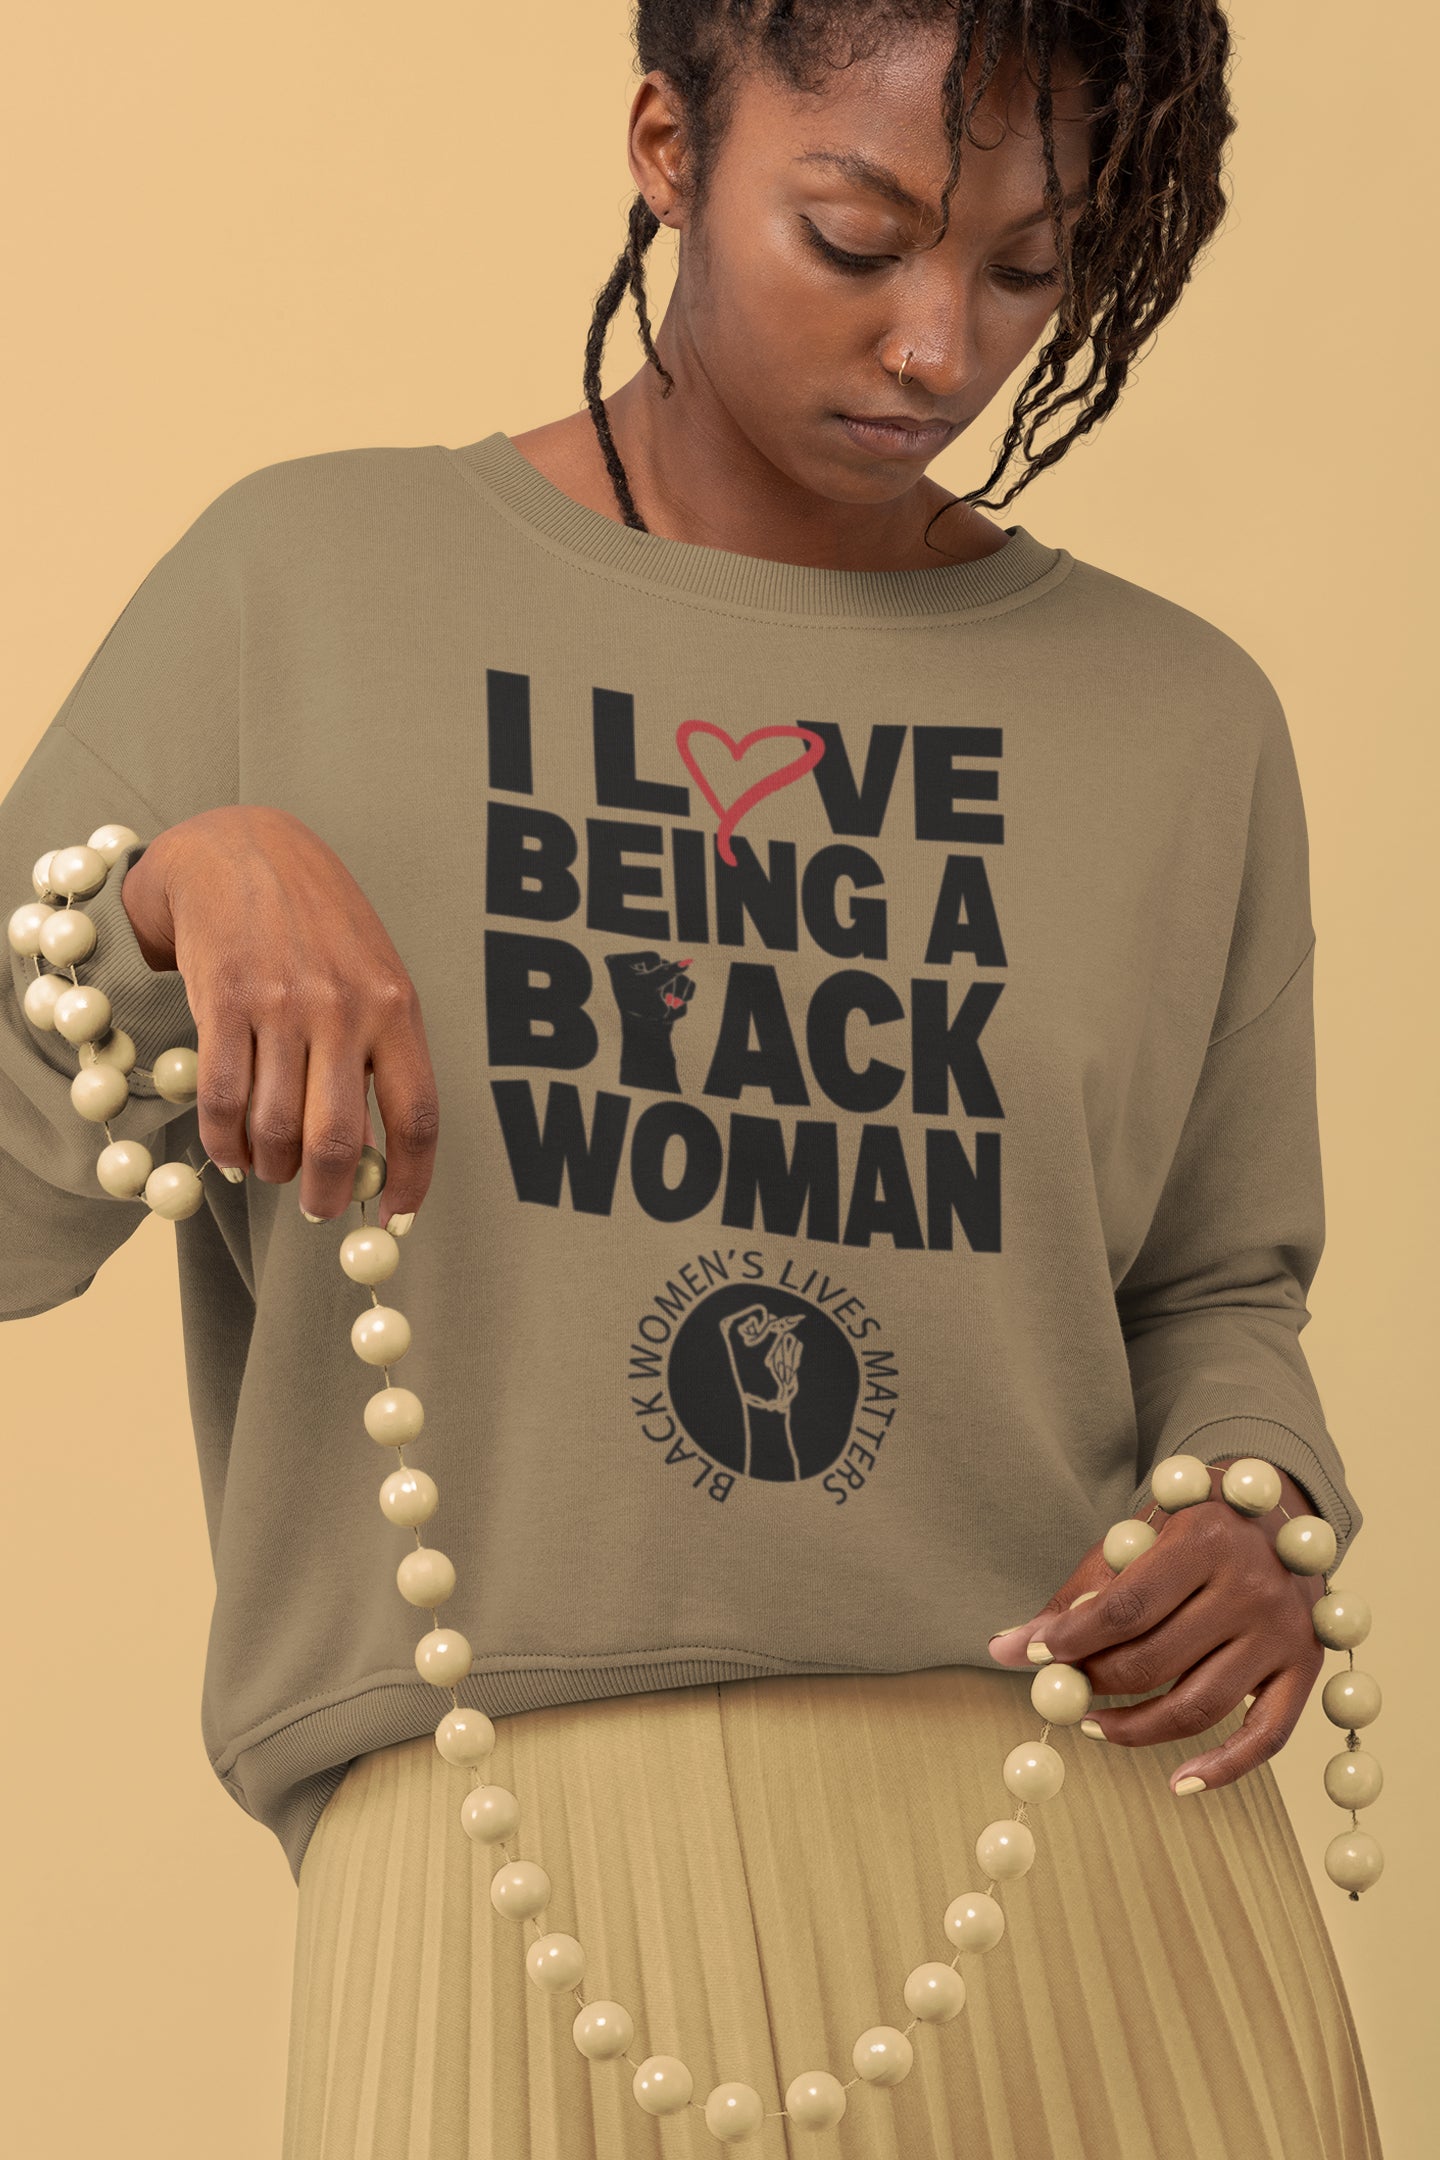 Black History "I Love Being A Black Woman" sweatshirt